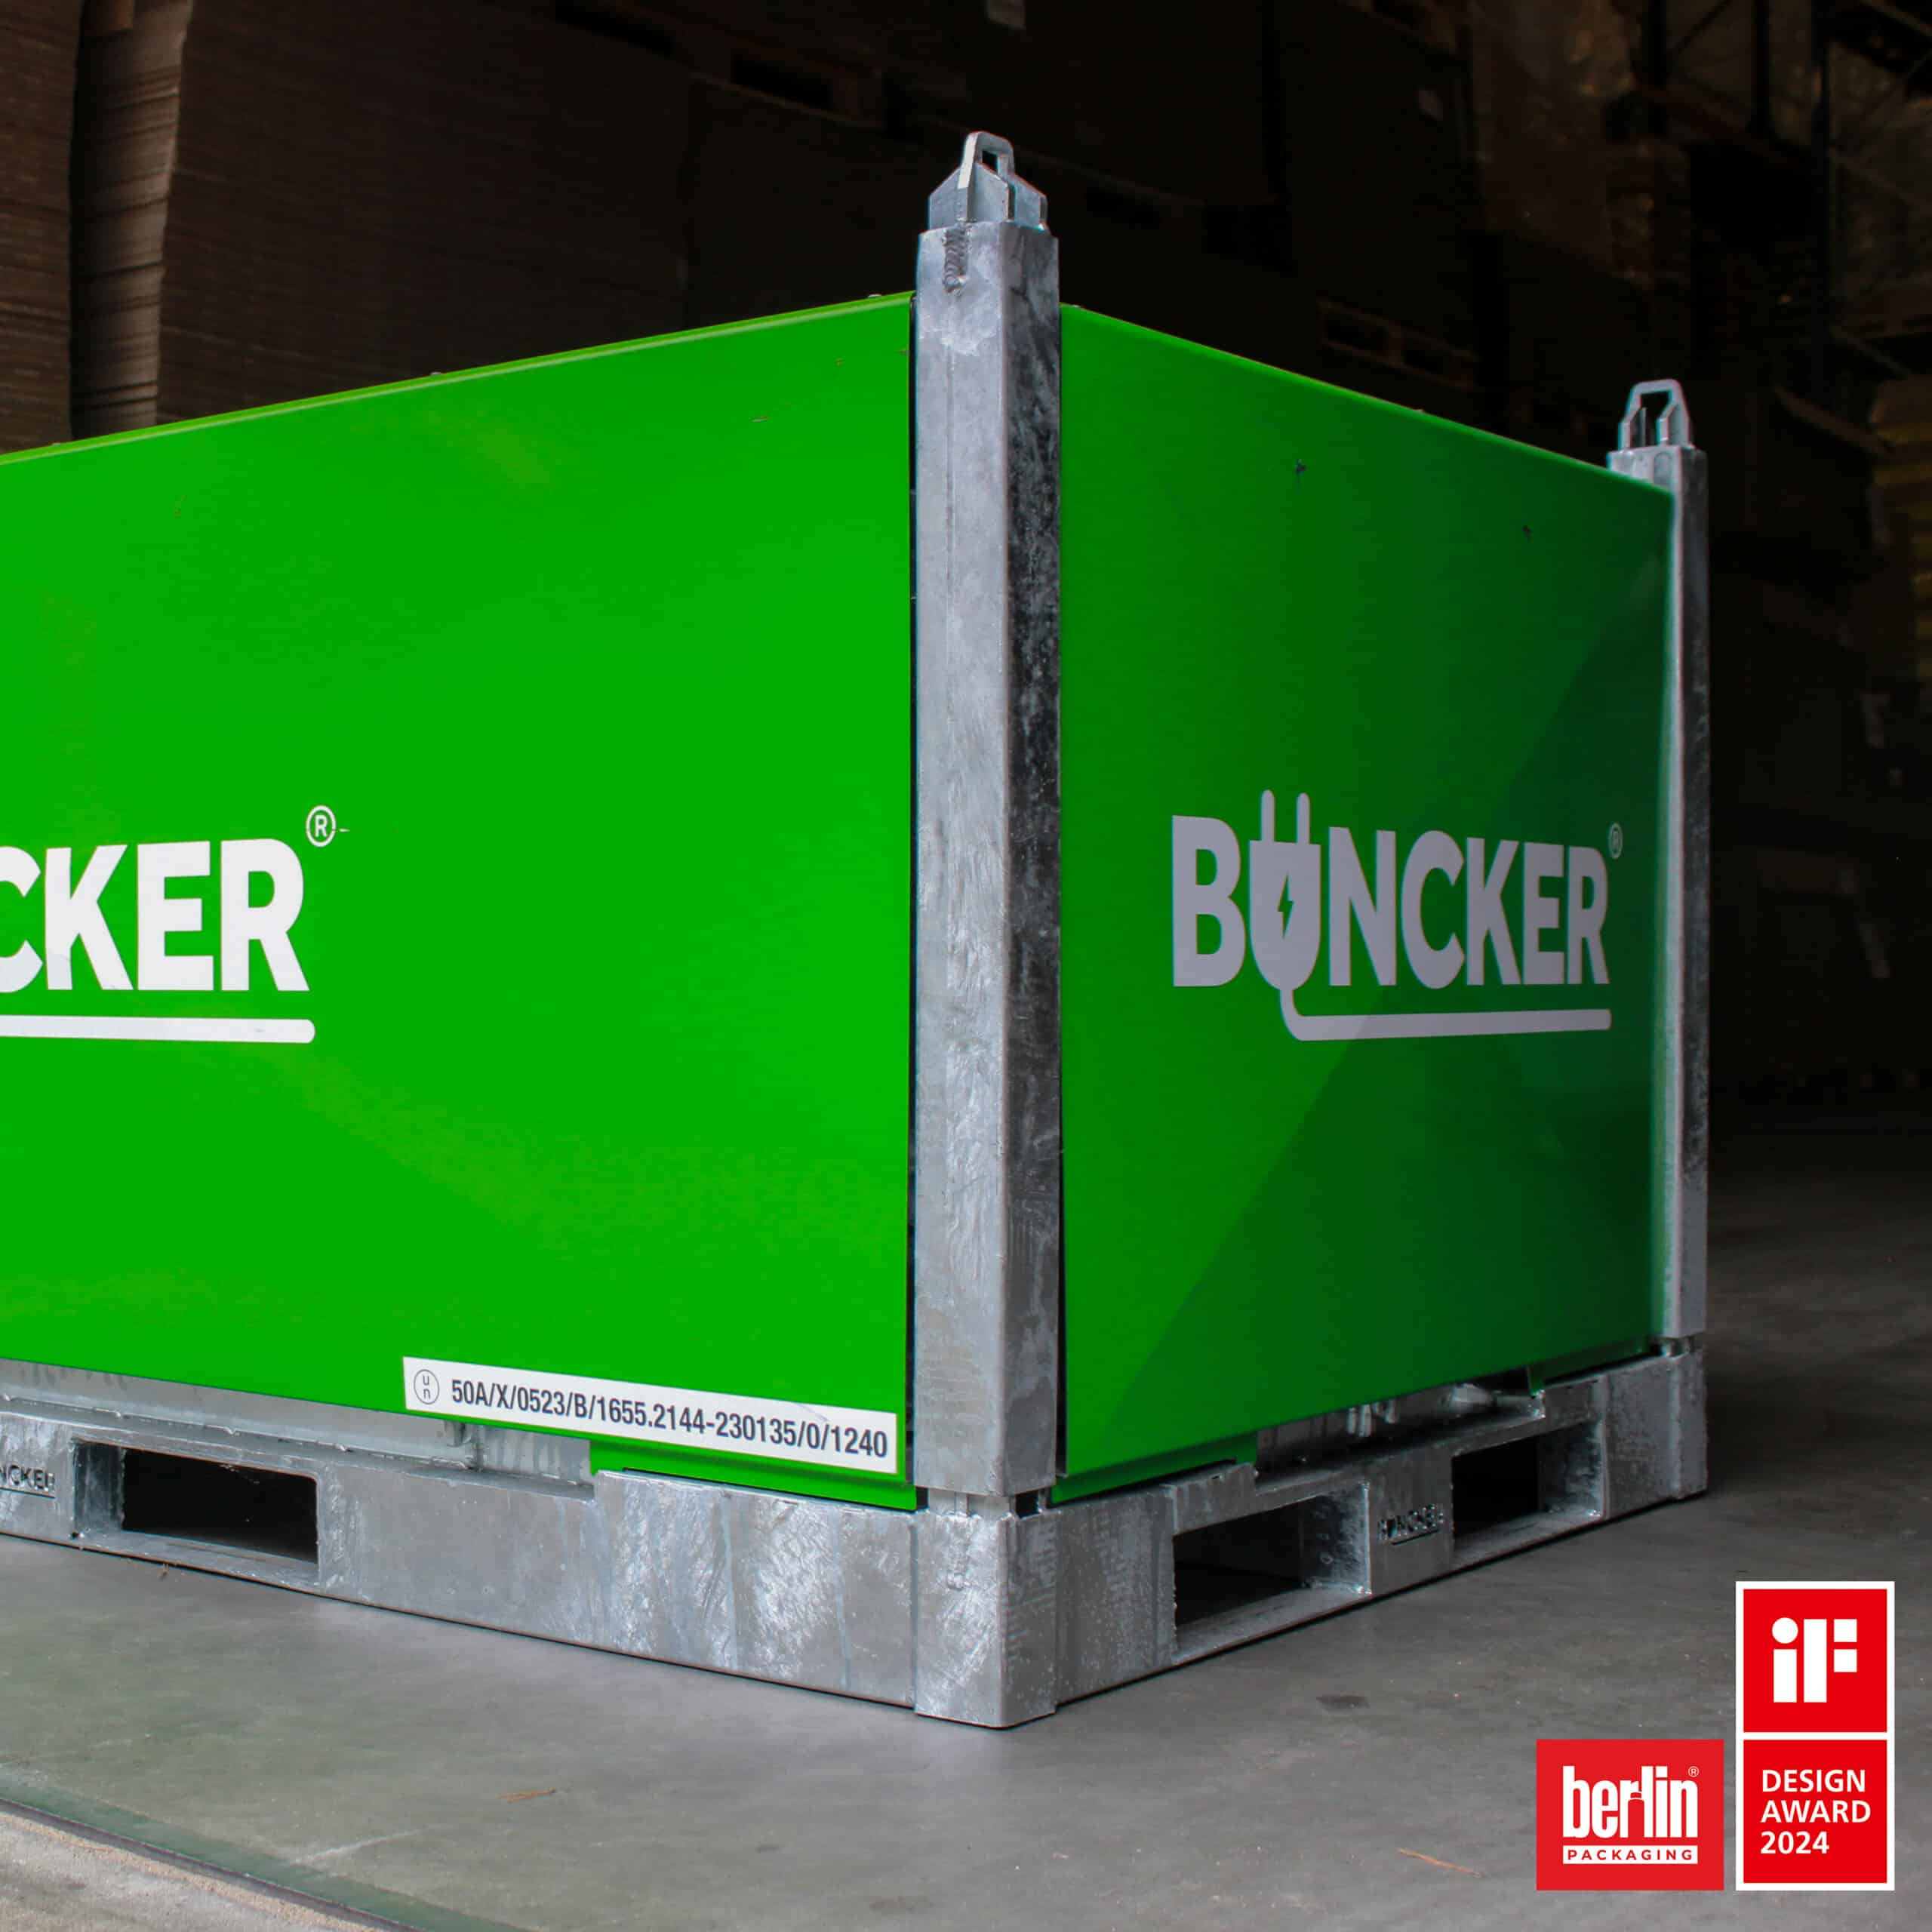 Buncker Picture 1 IF Design Berlin Packaging vierkant scaled Uncategorized